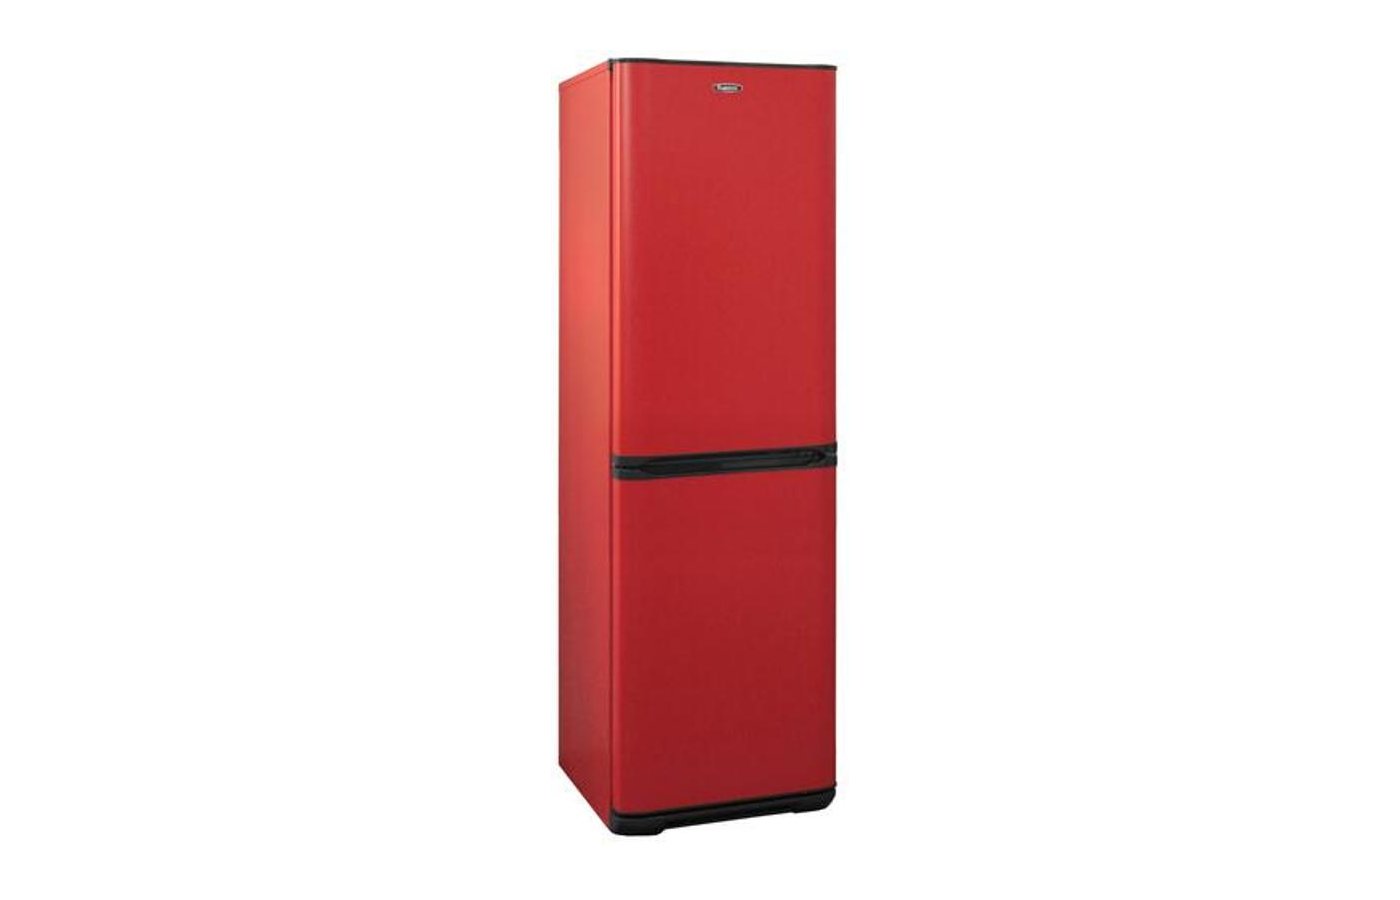 Бирюса 380nf. Холодильник Бирюса h633 красный. Холодильник Бирюса t340nf оранжевый. Холодильник Бирюса h340nf, красный. Бирюса h320nf холодильник.